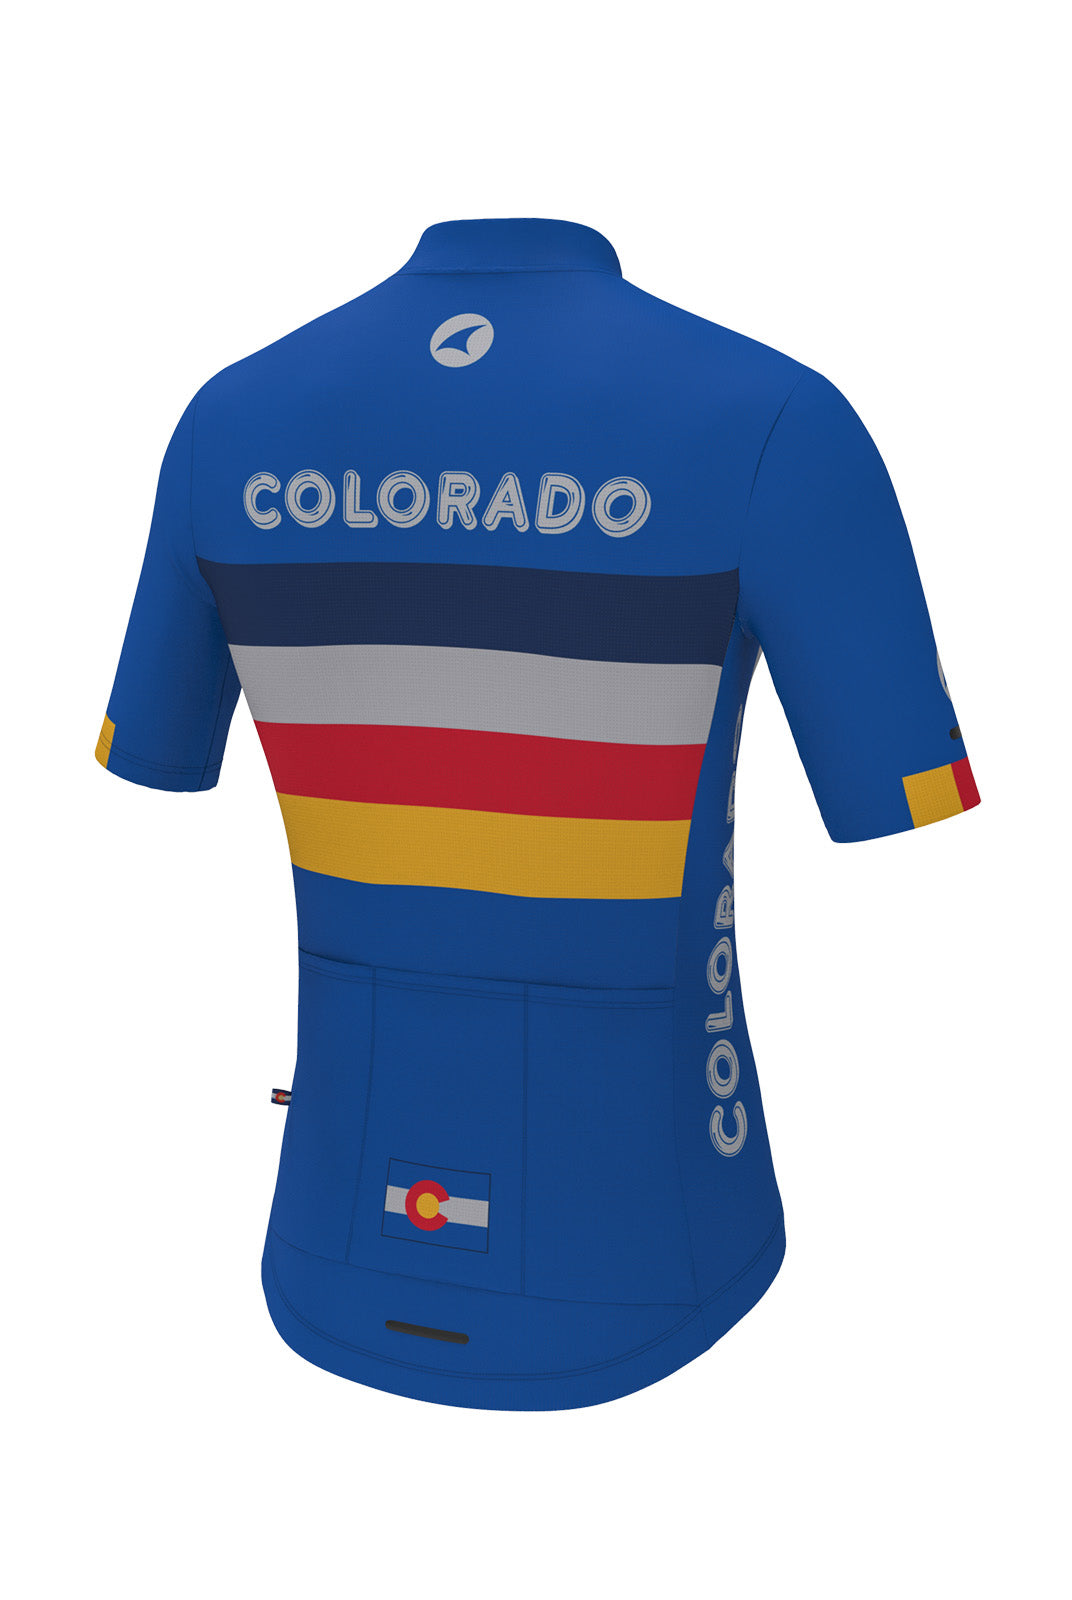 Men's Retro Blue Colorado Cycling Jersey - Ascent Aero Back View